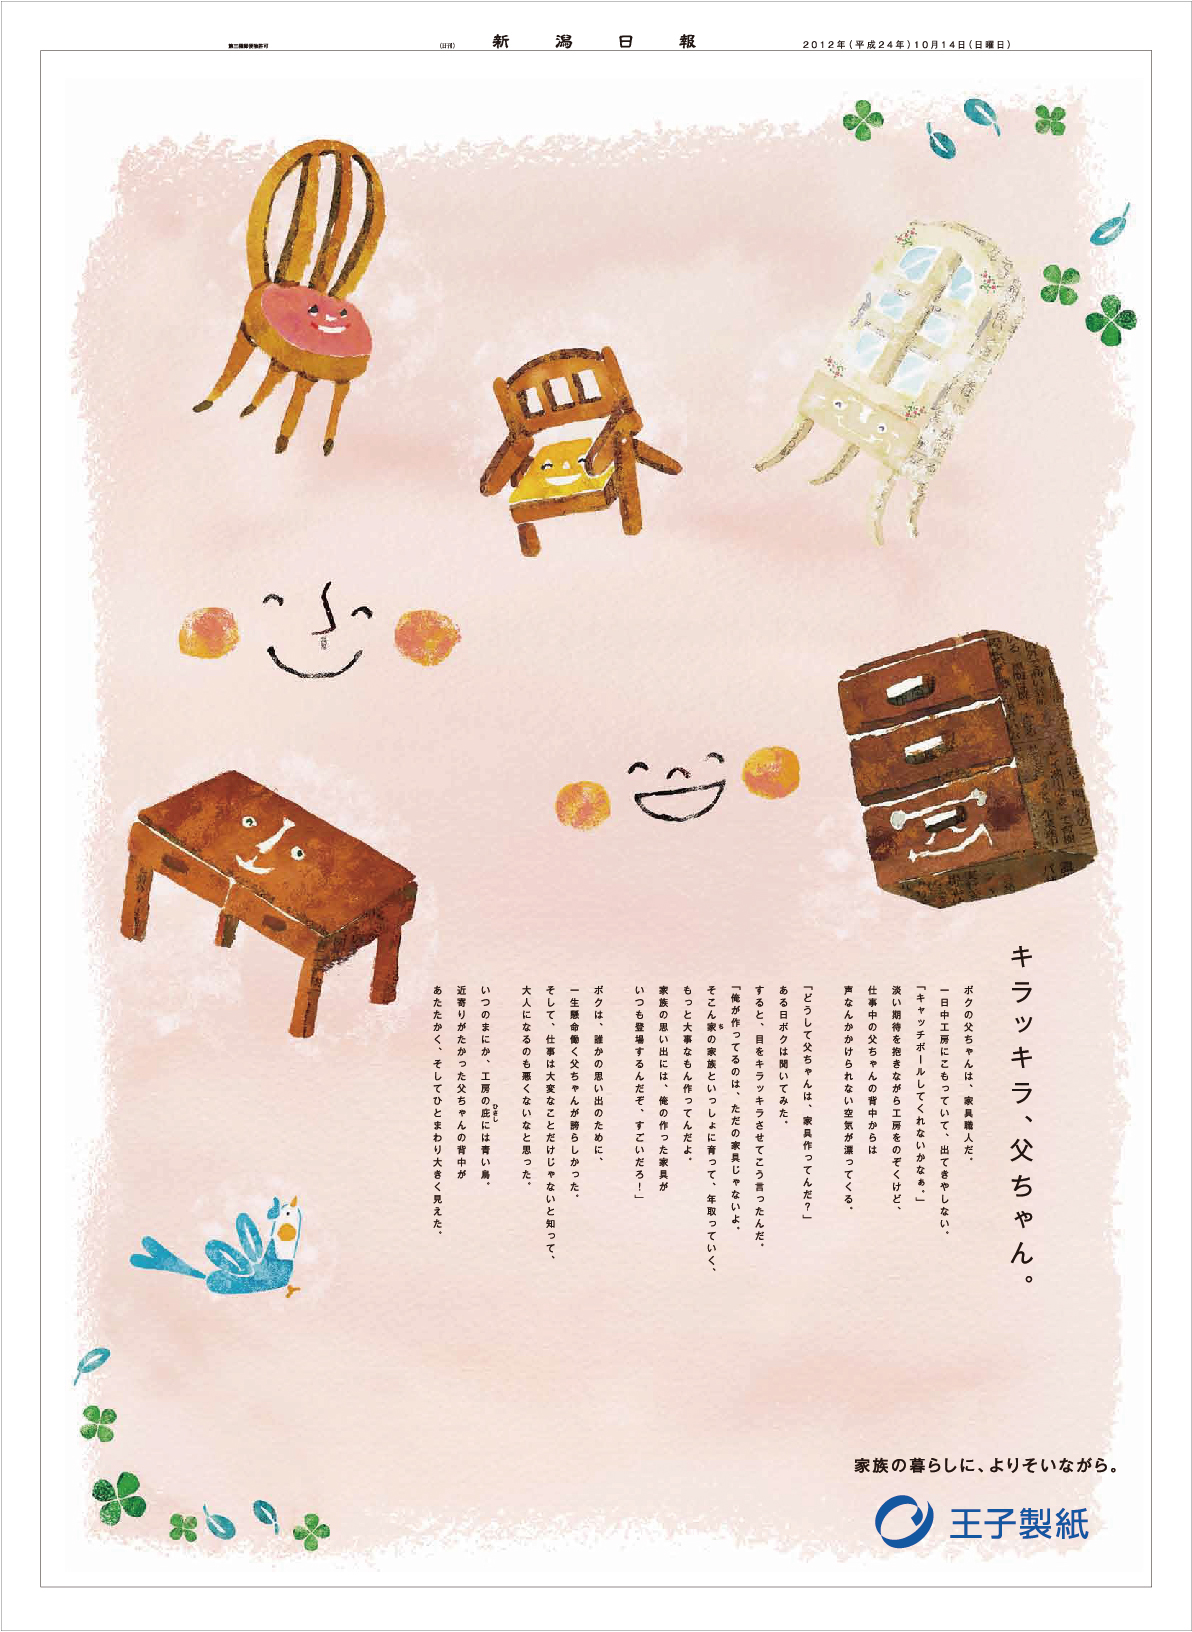 ILLUSTRATION  photoshop advertisement Illustrator japan newspaper advertisement